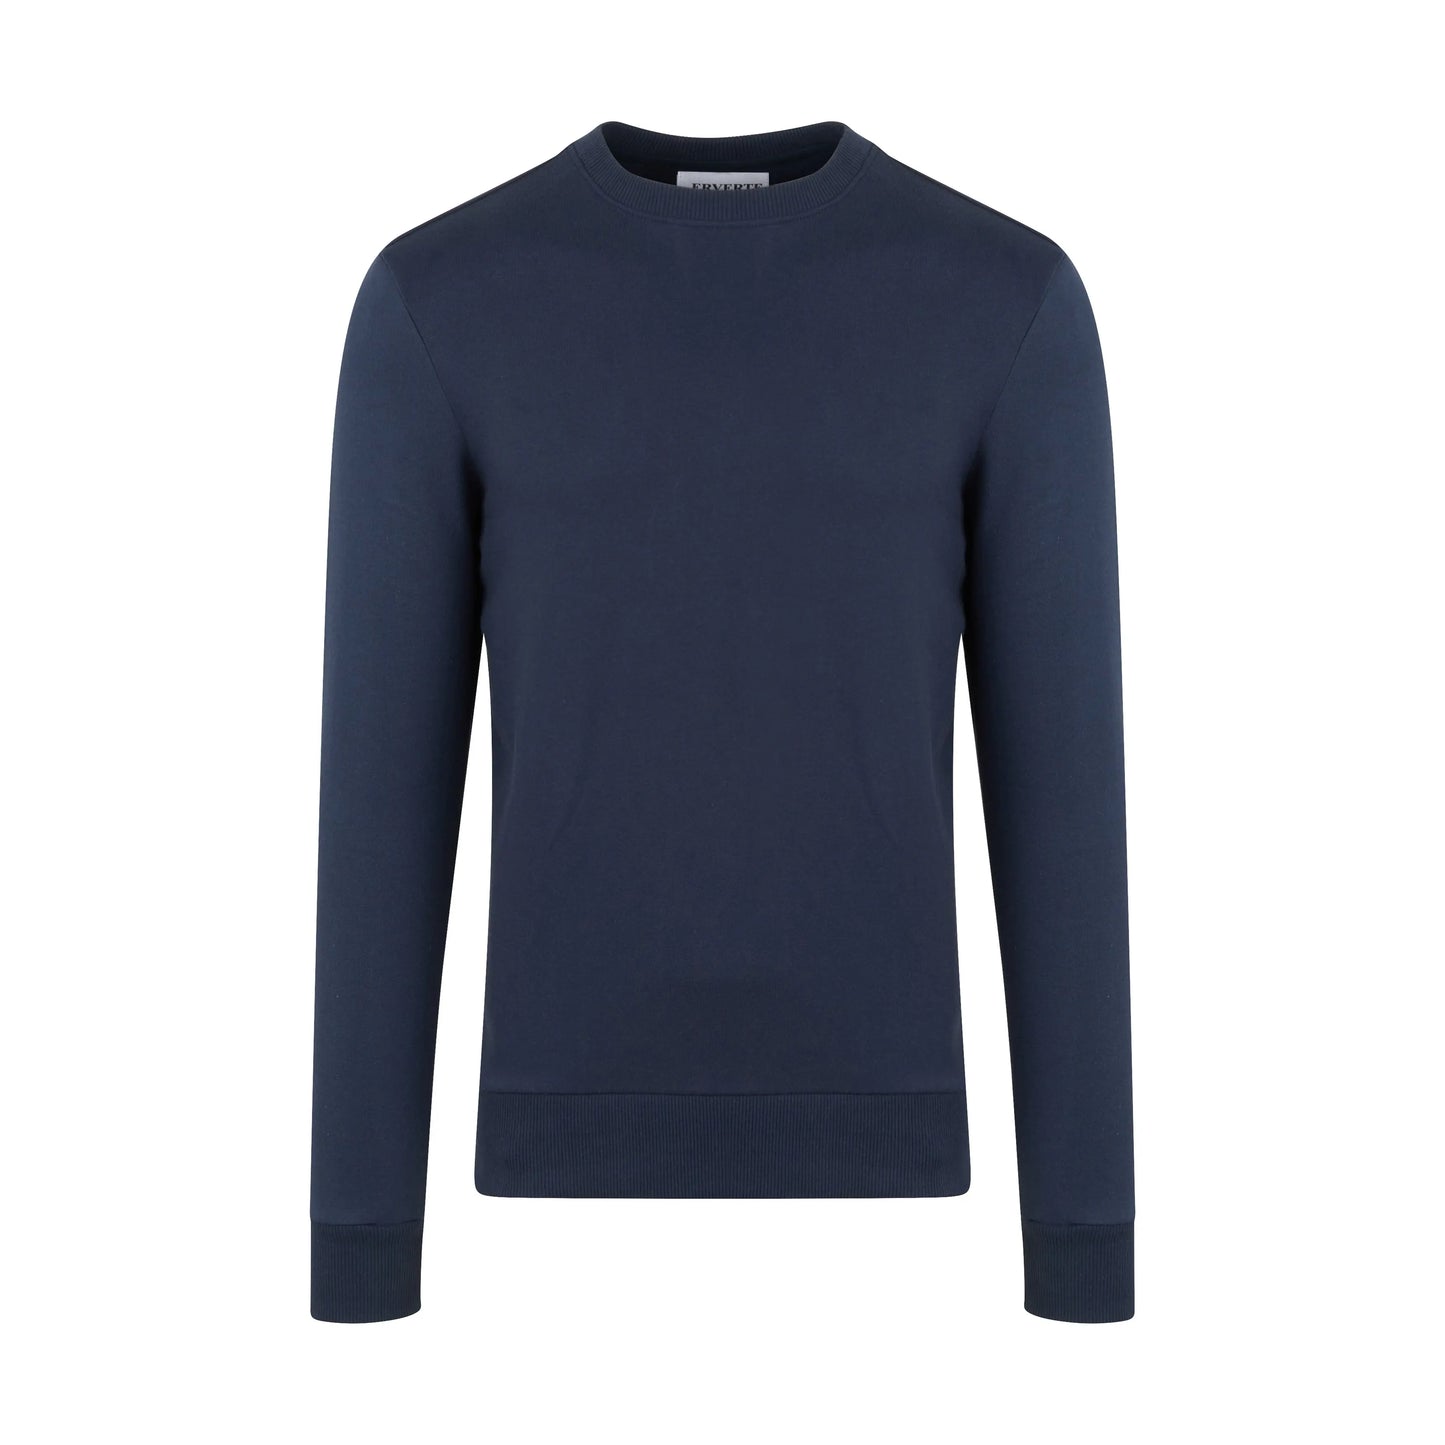 Navy Blue Causal Sweatshirt | Navy Blue Sweatshirt | Erverte Paris